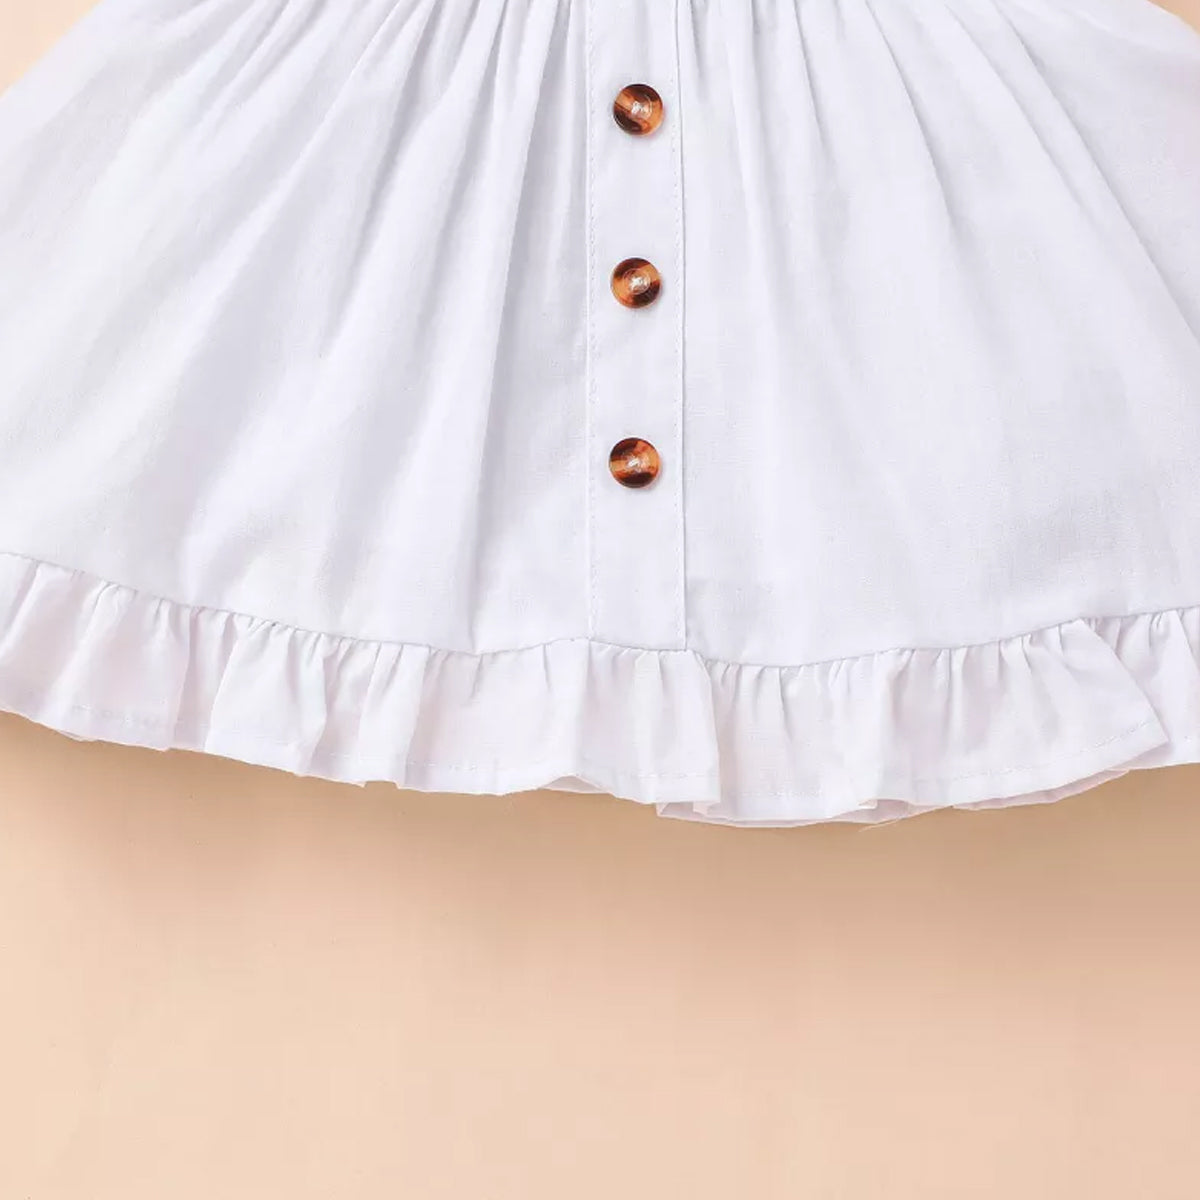 BabyGirl Princess White Button & Multi Hearts designer Tunic Dresses Combo Pack for Baby Girls.